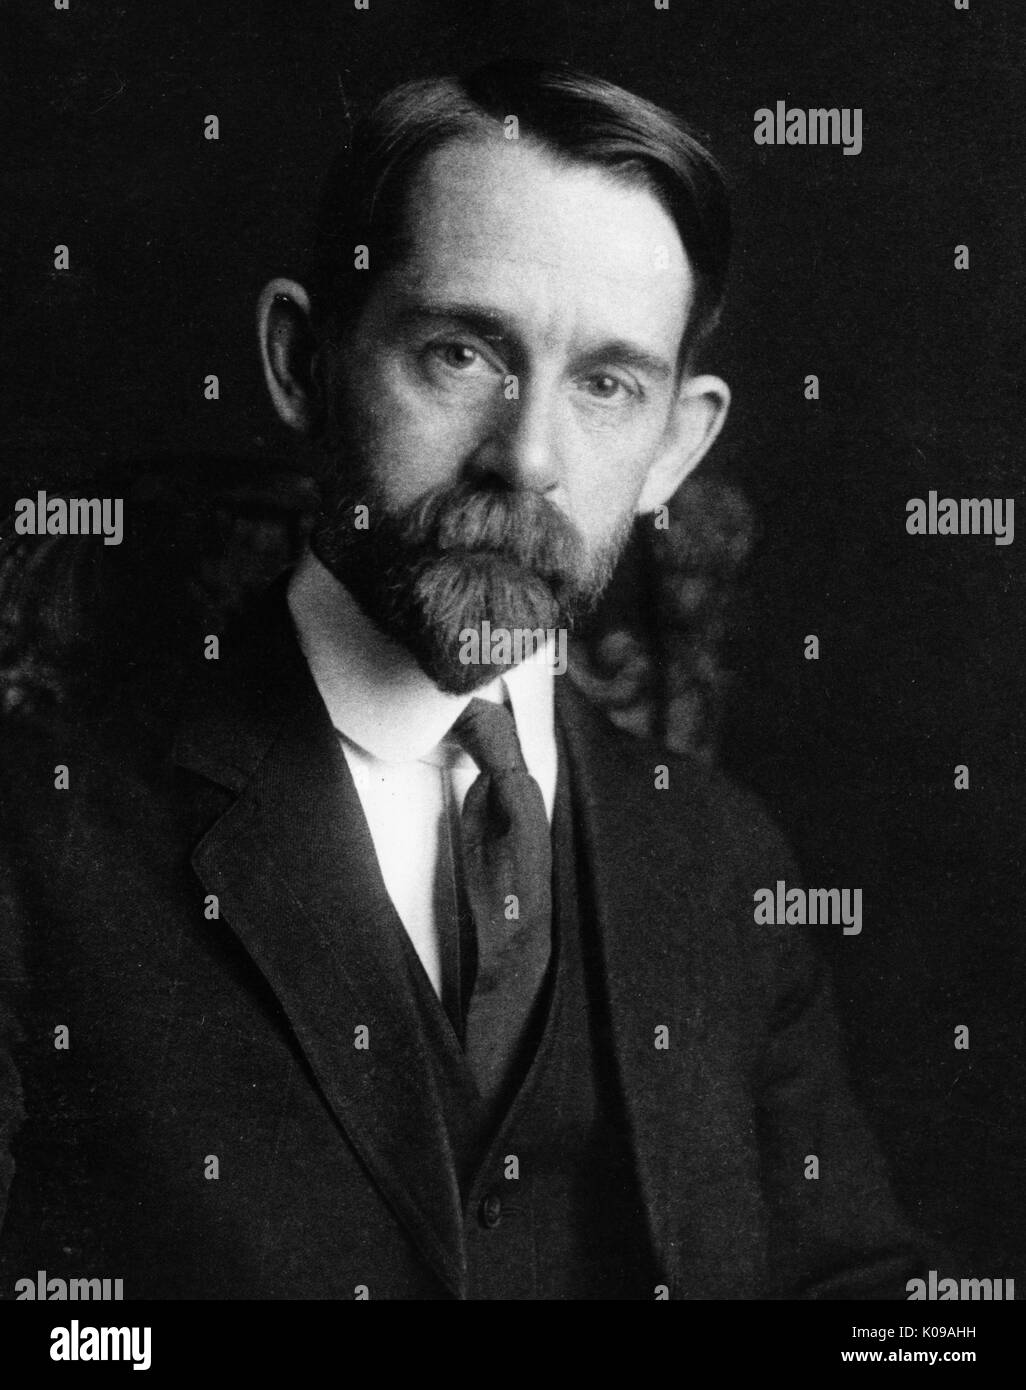 Taille bis sitzt Portrait von Herbert Zoologe, Genetiker, und Professor Herbert Spencer Jennings, 1909. Stockfoto